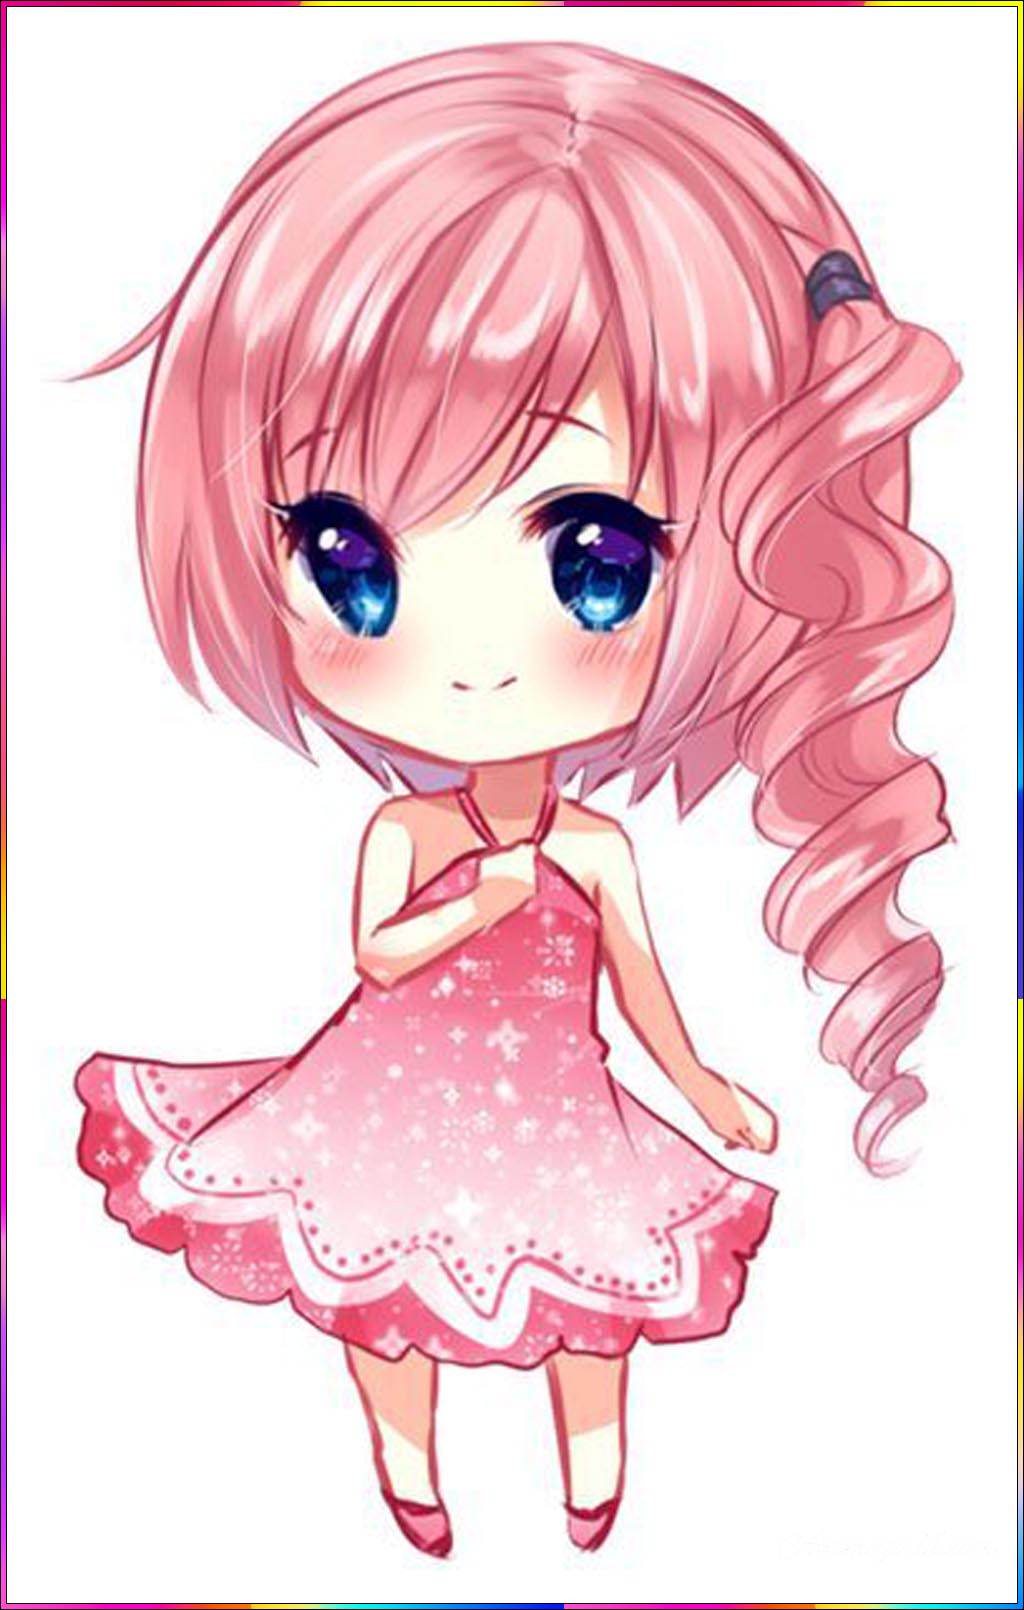 little anime girl in pink dress